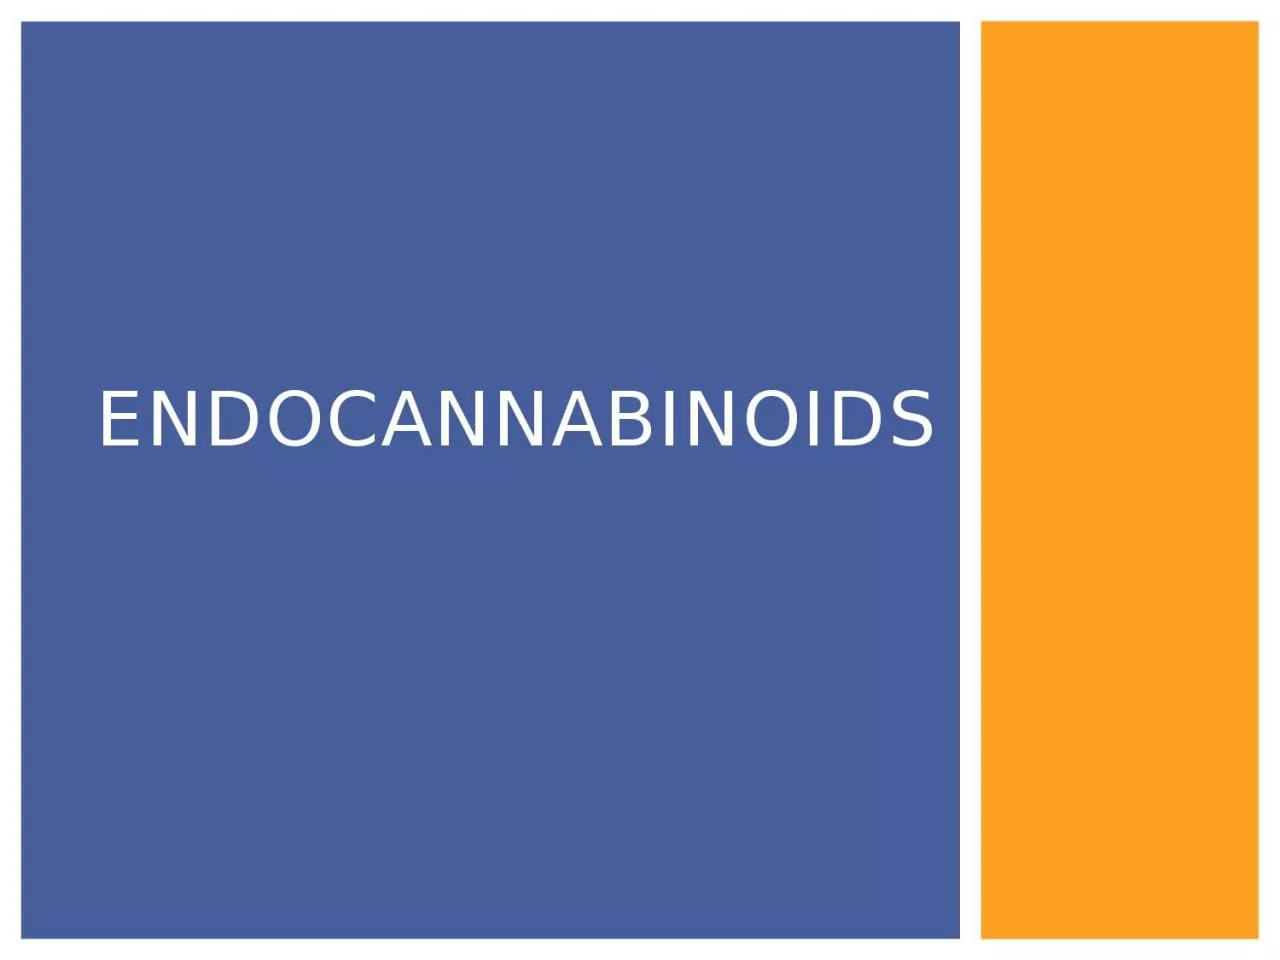 Endocannabinoids ENDROGENOUS, LIPID-BASED NEUROTRANSMITTER